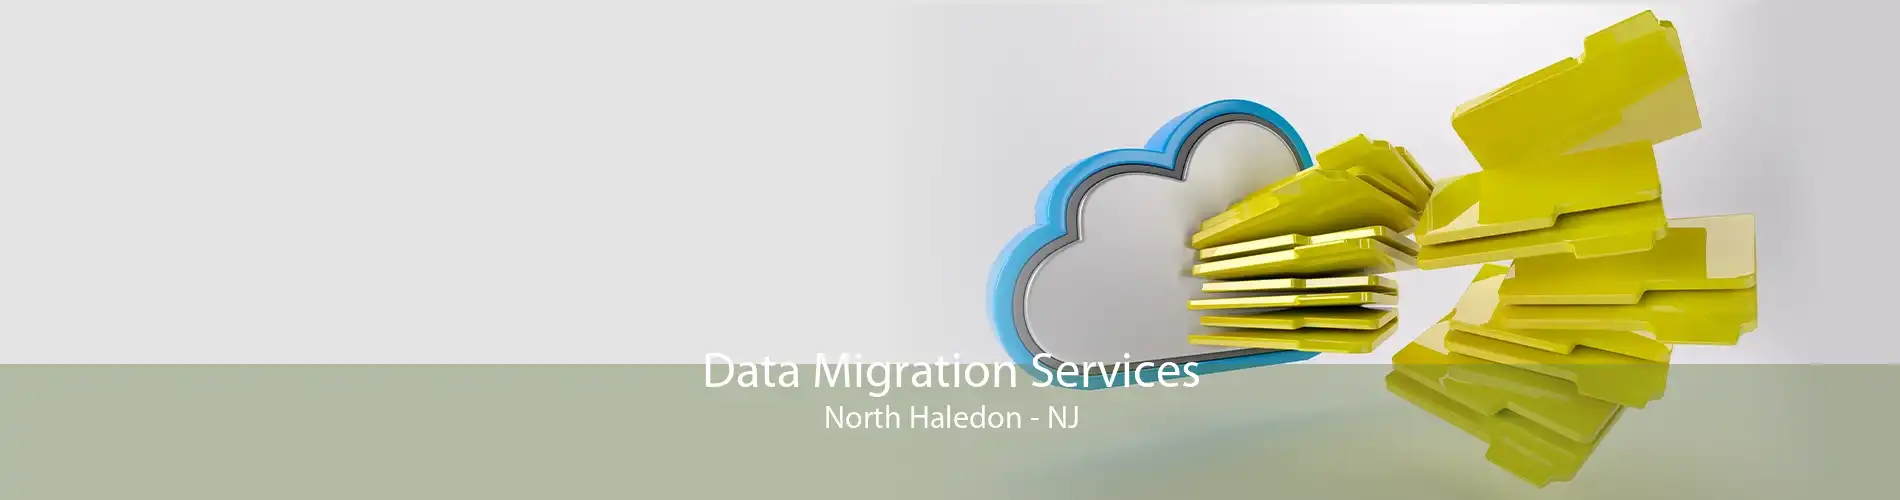 Data Migration Services North Haledon - NJ